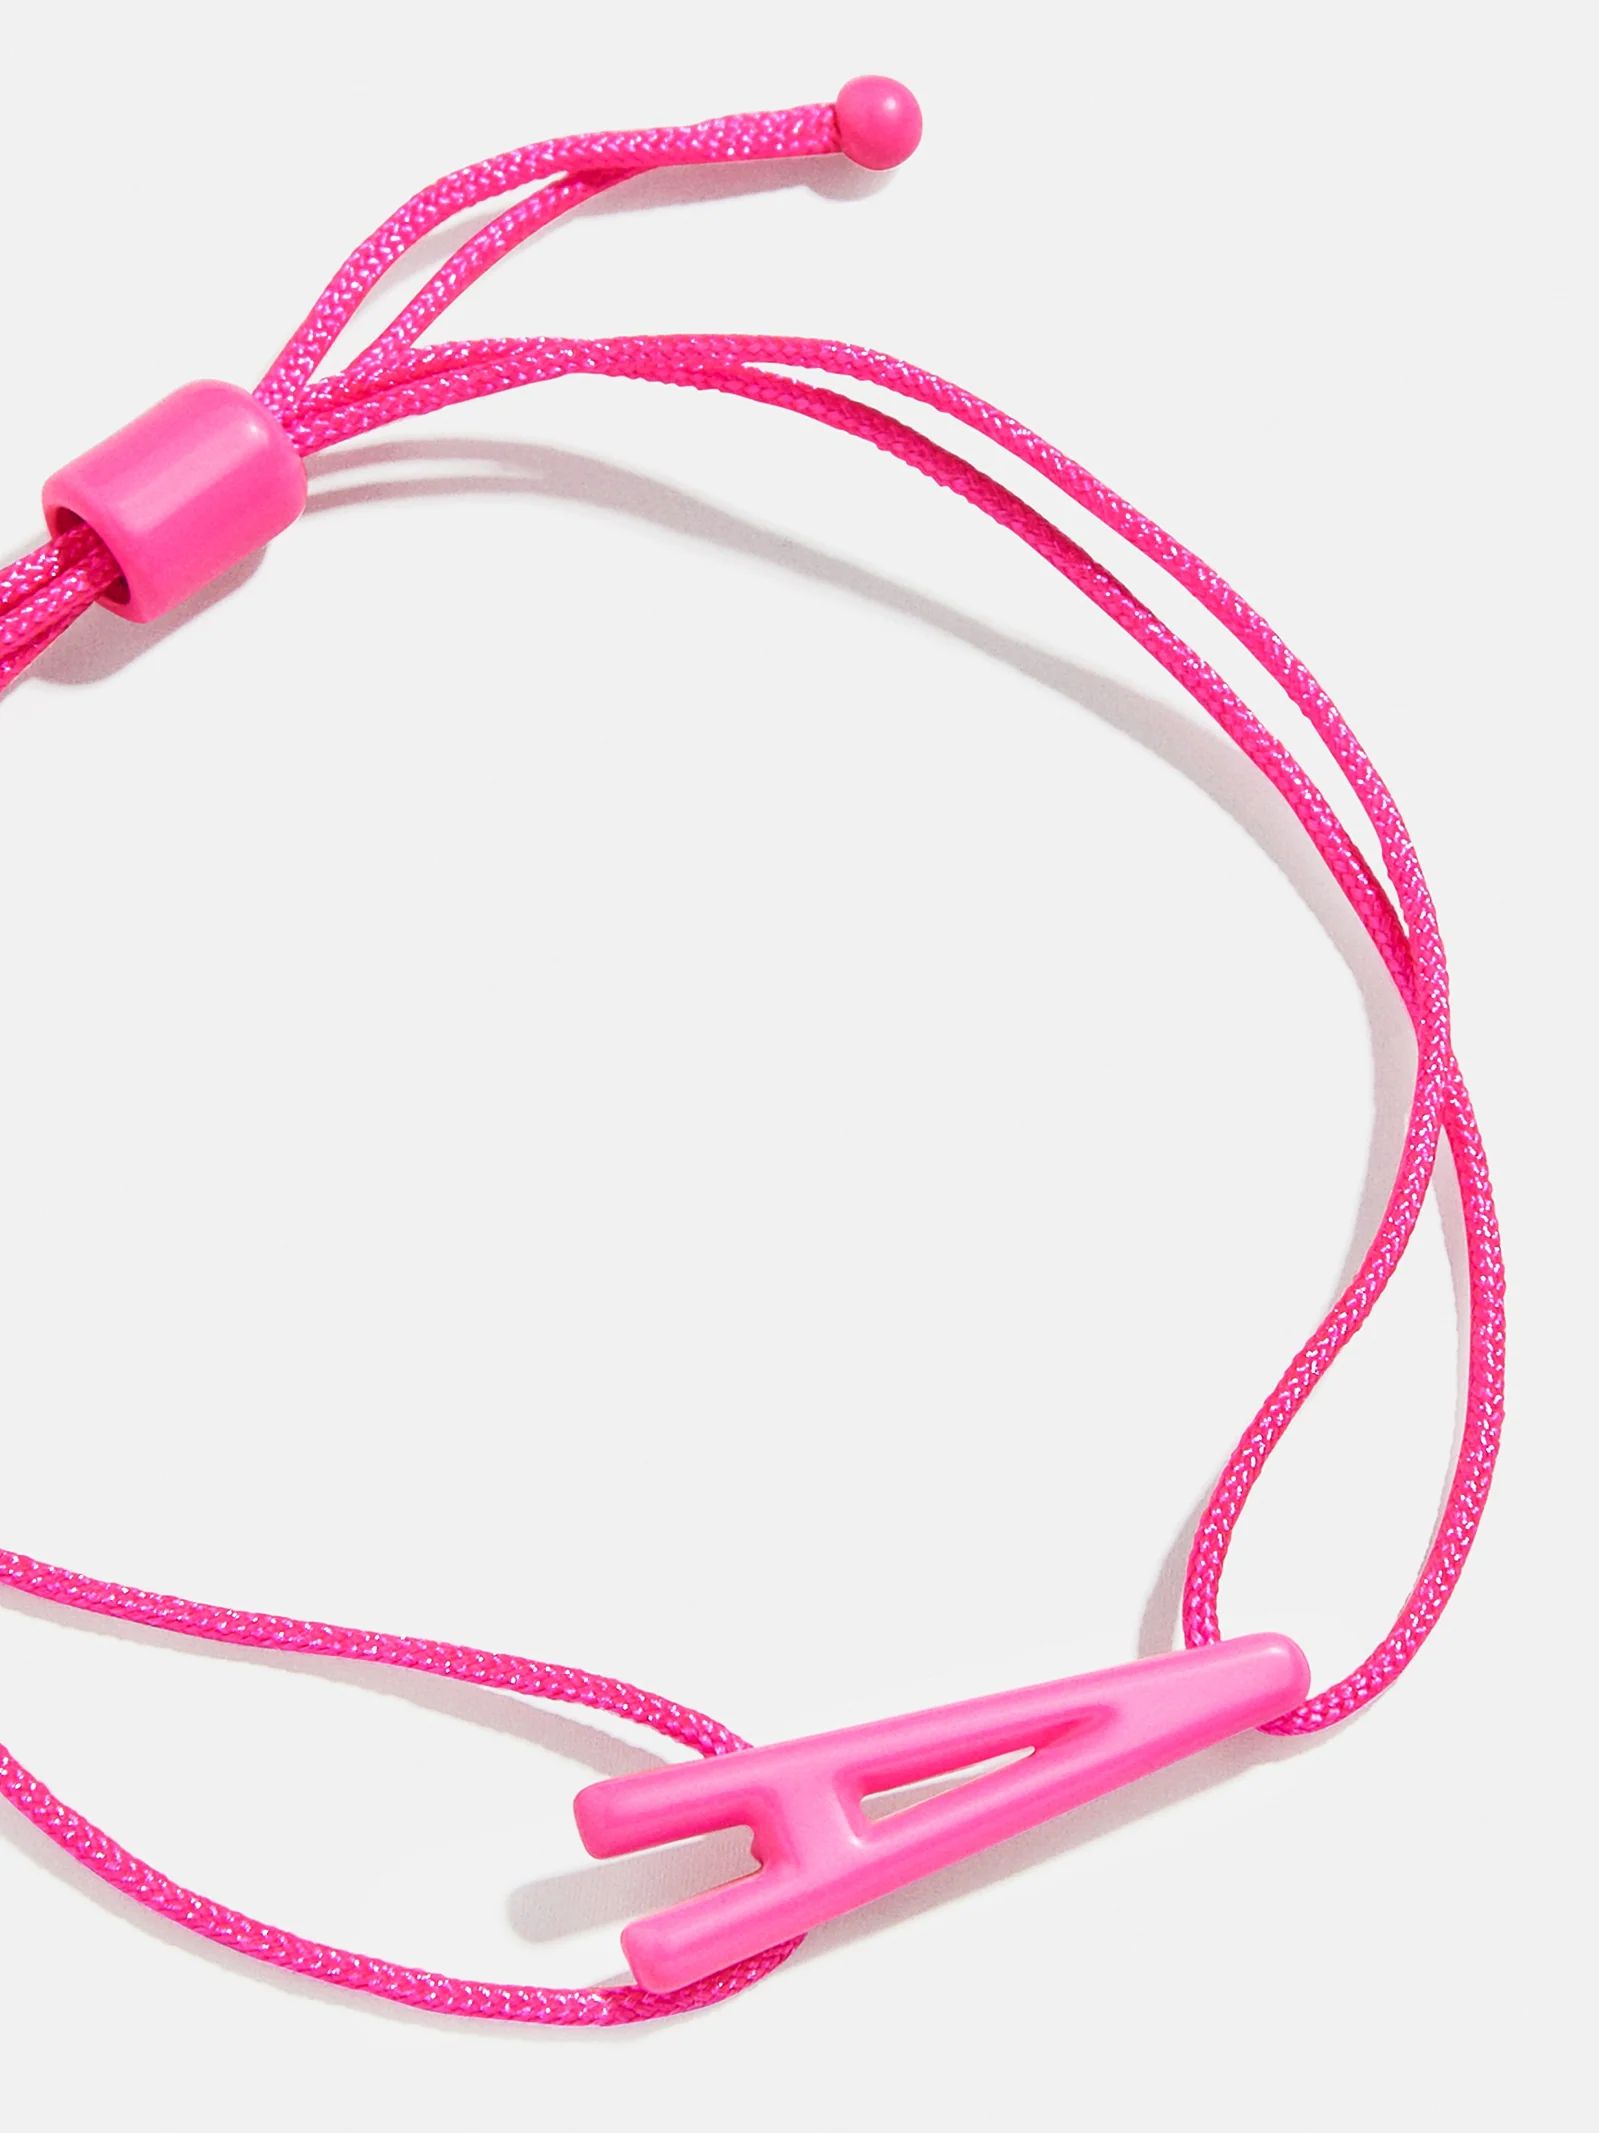 East West Initial Cord Bracelet - Hot Pink | BaubleBar (US)